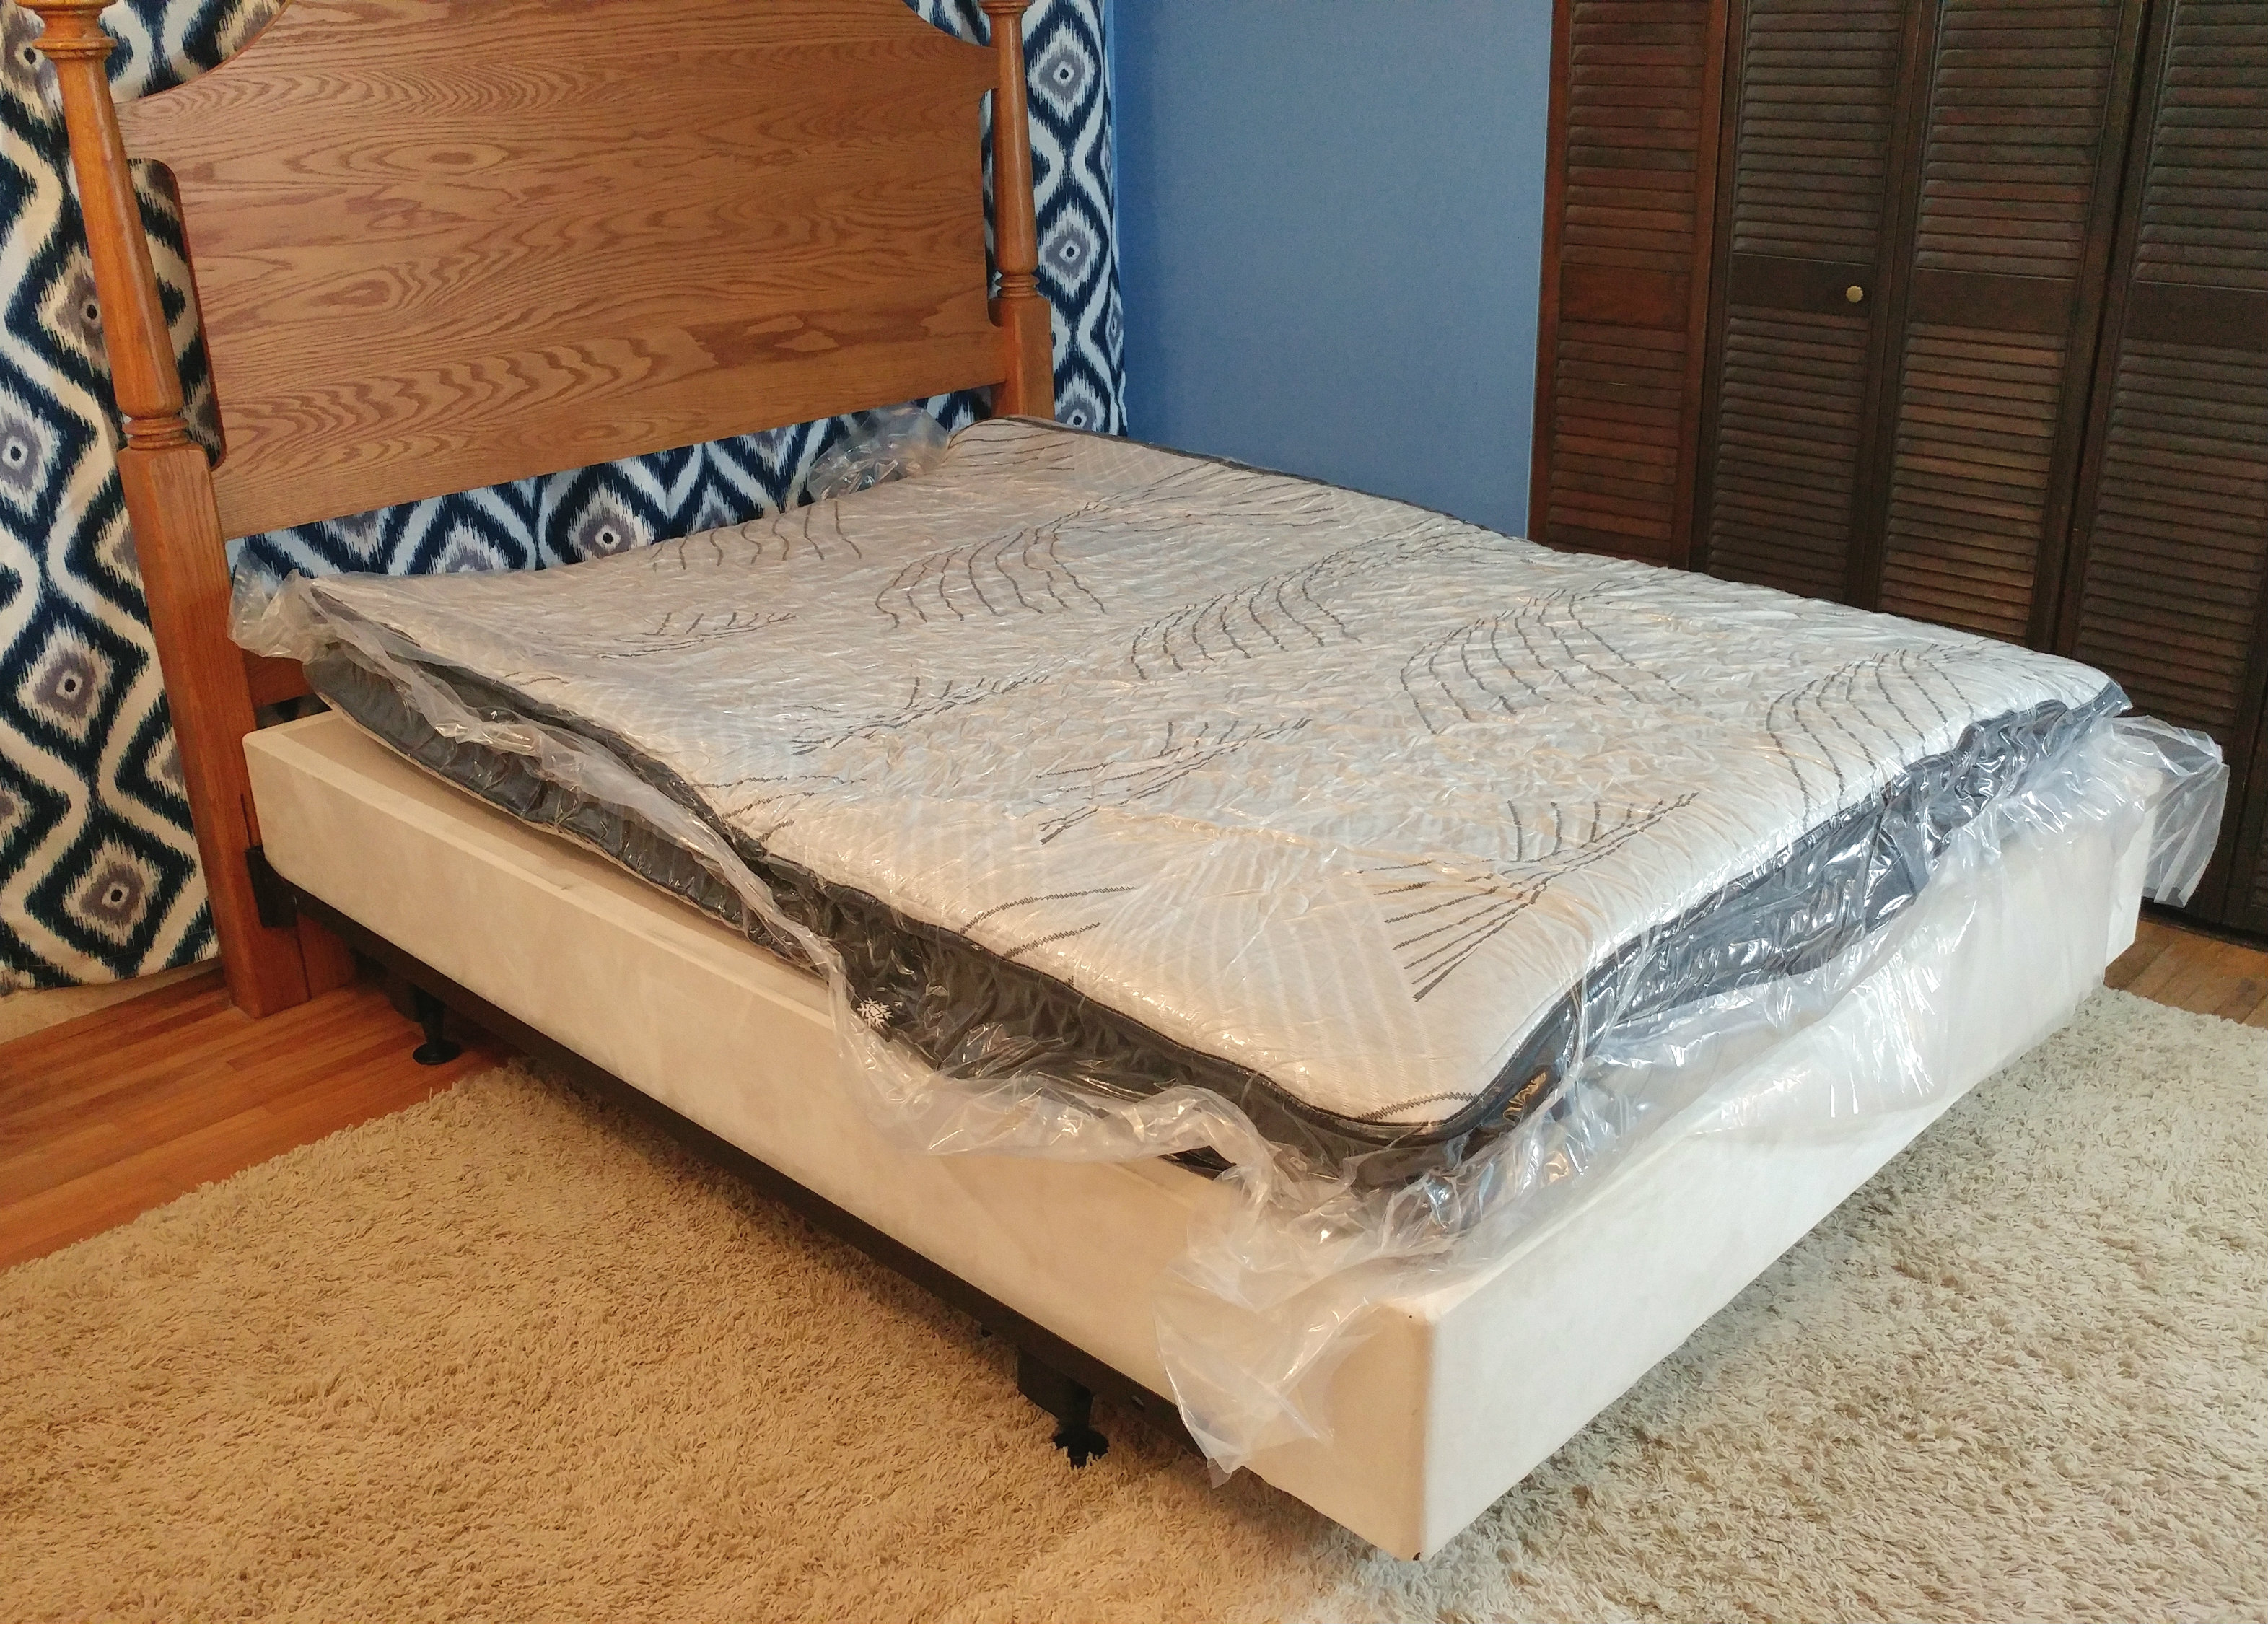 idle hybrid mattress reddit